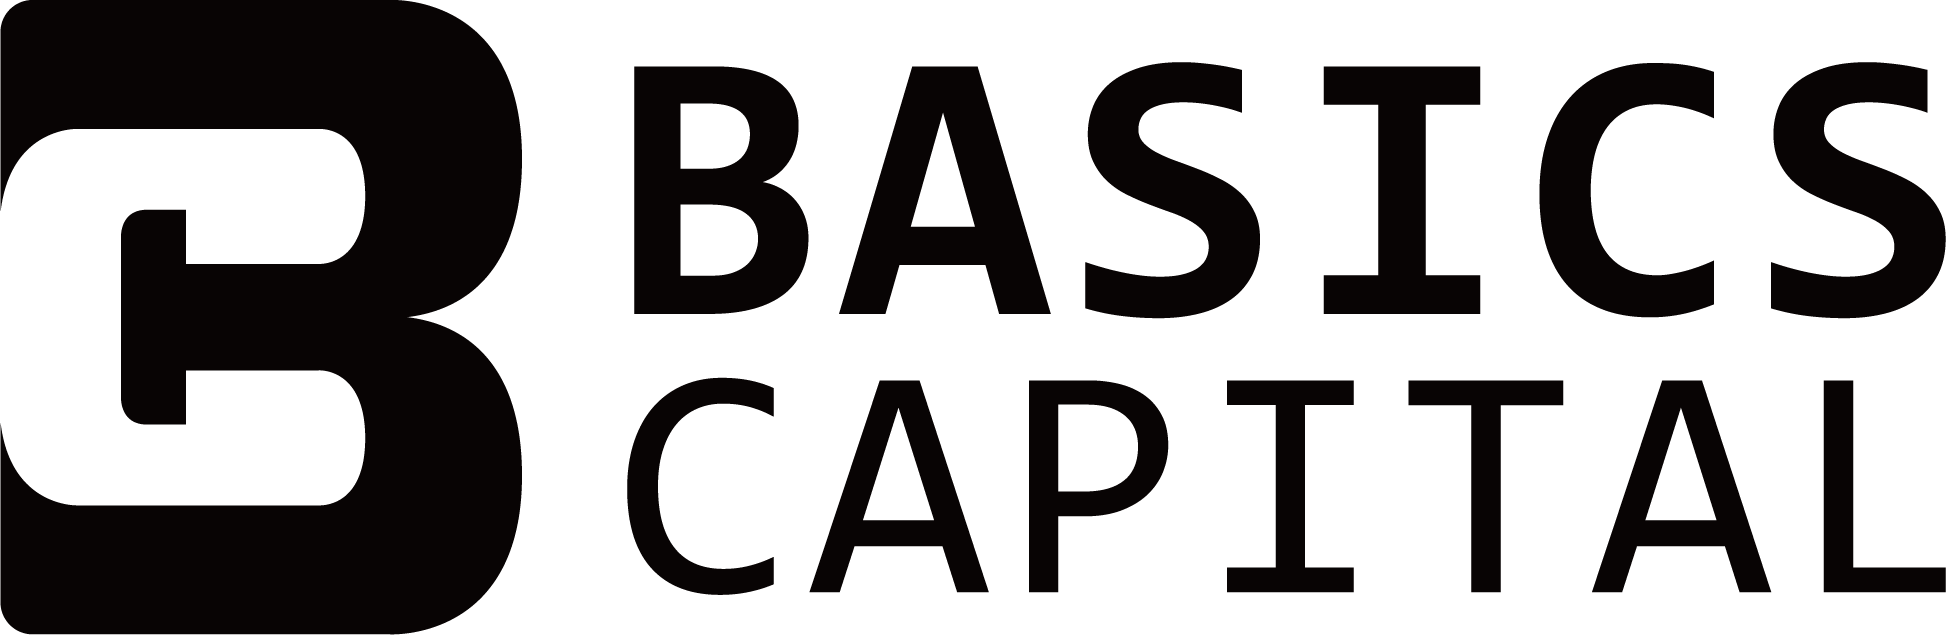 ./images/Backers/basics-capital.png